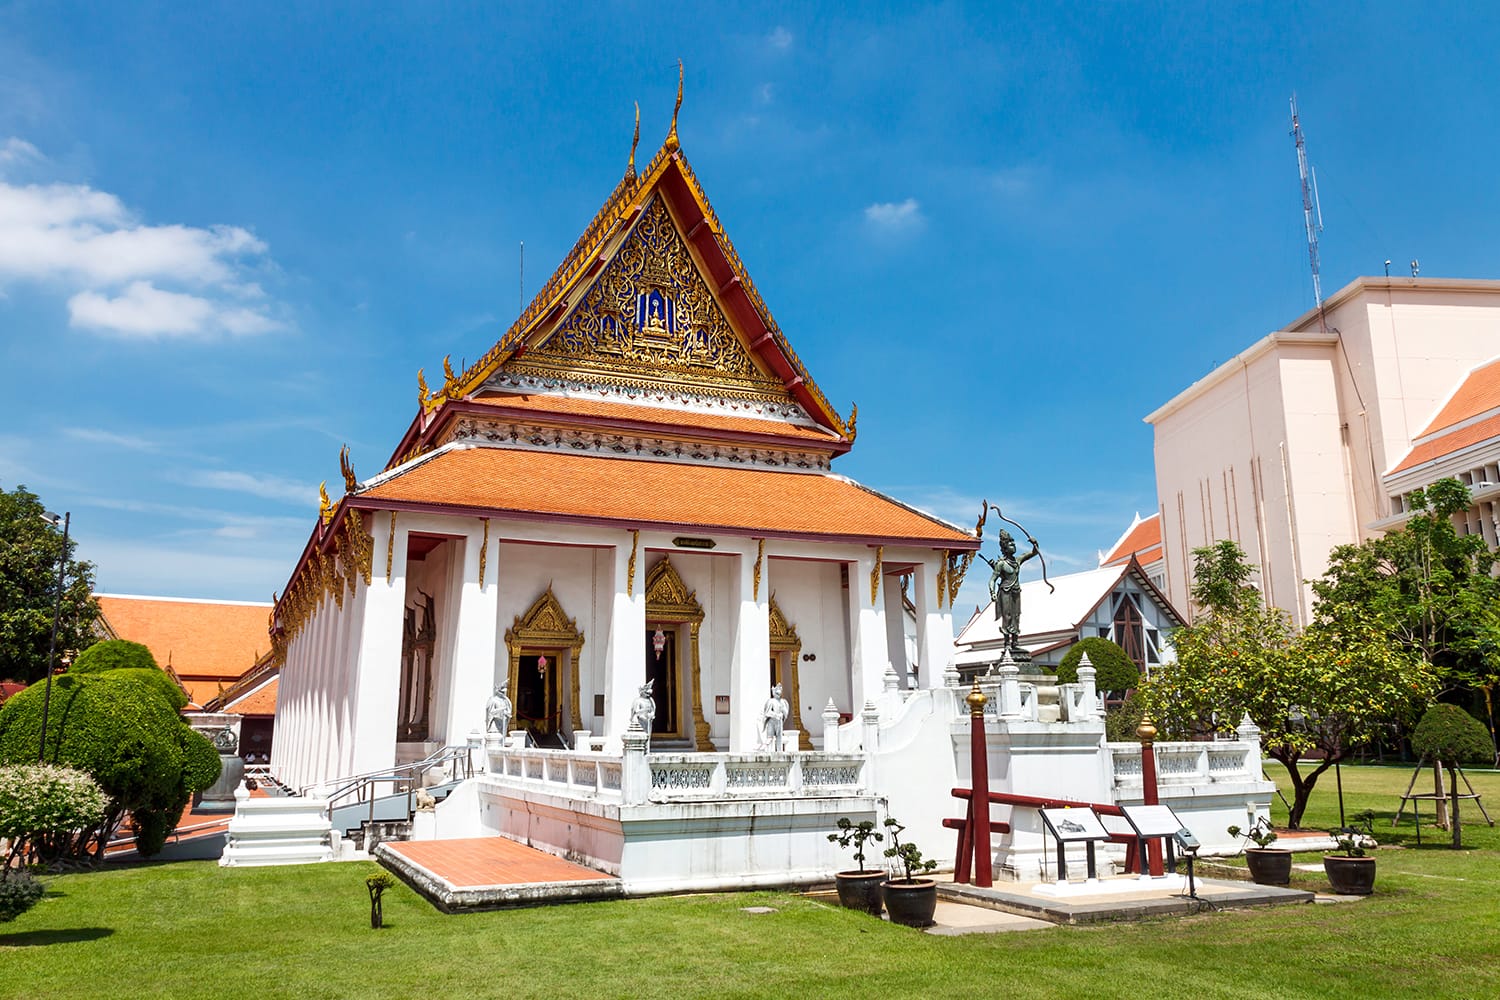 Bangkok National Museum in Thailand